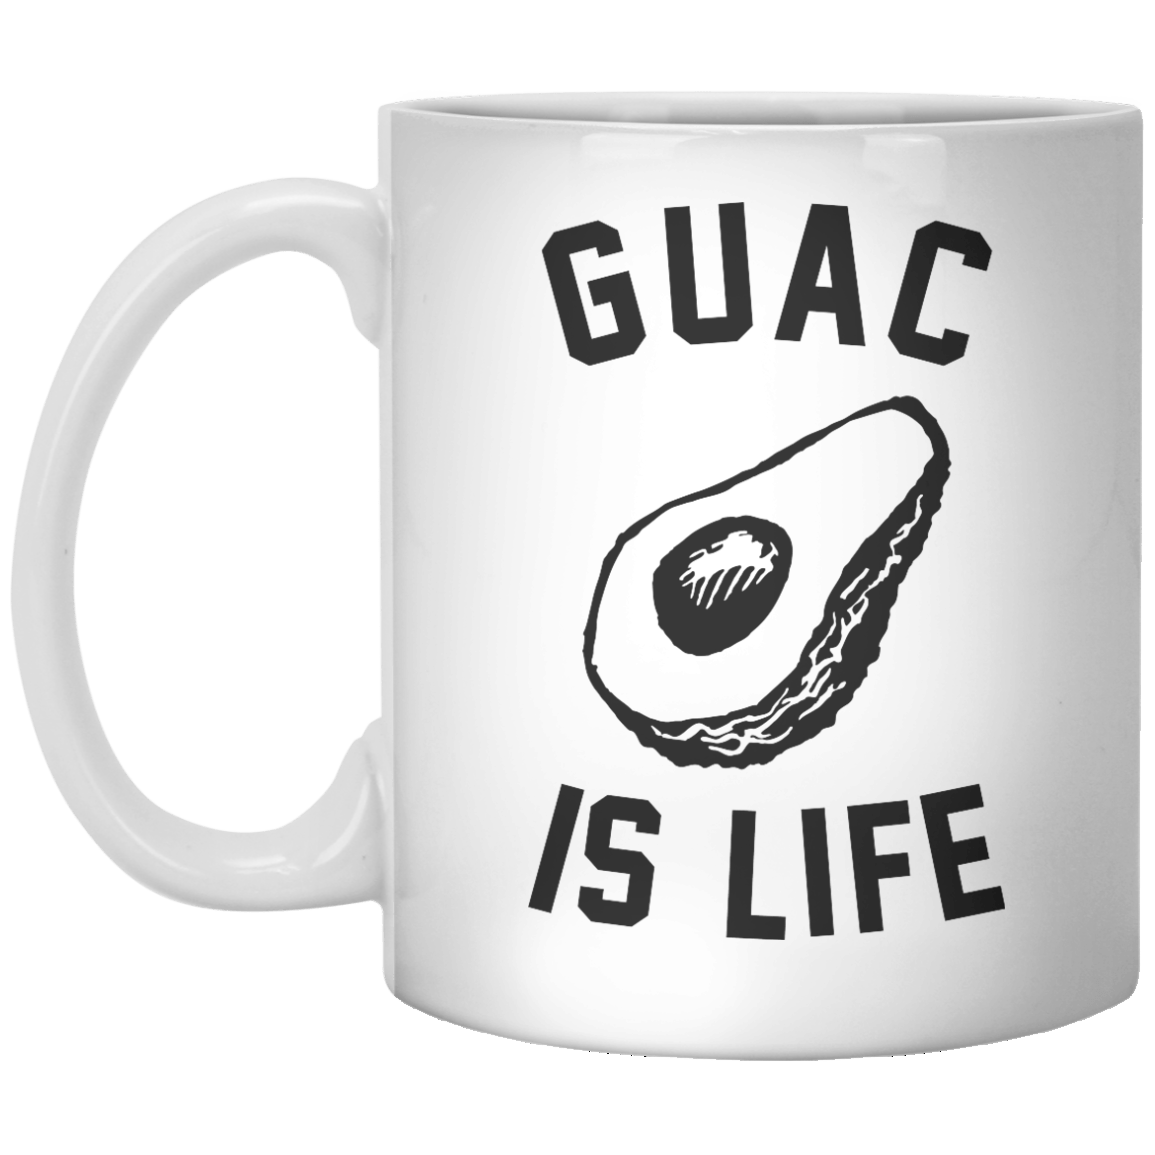 Guac Is Life - Shirtoopia